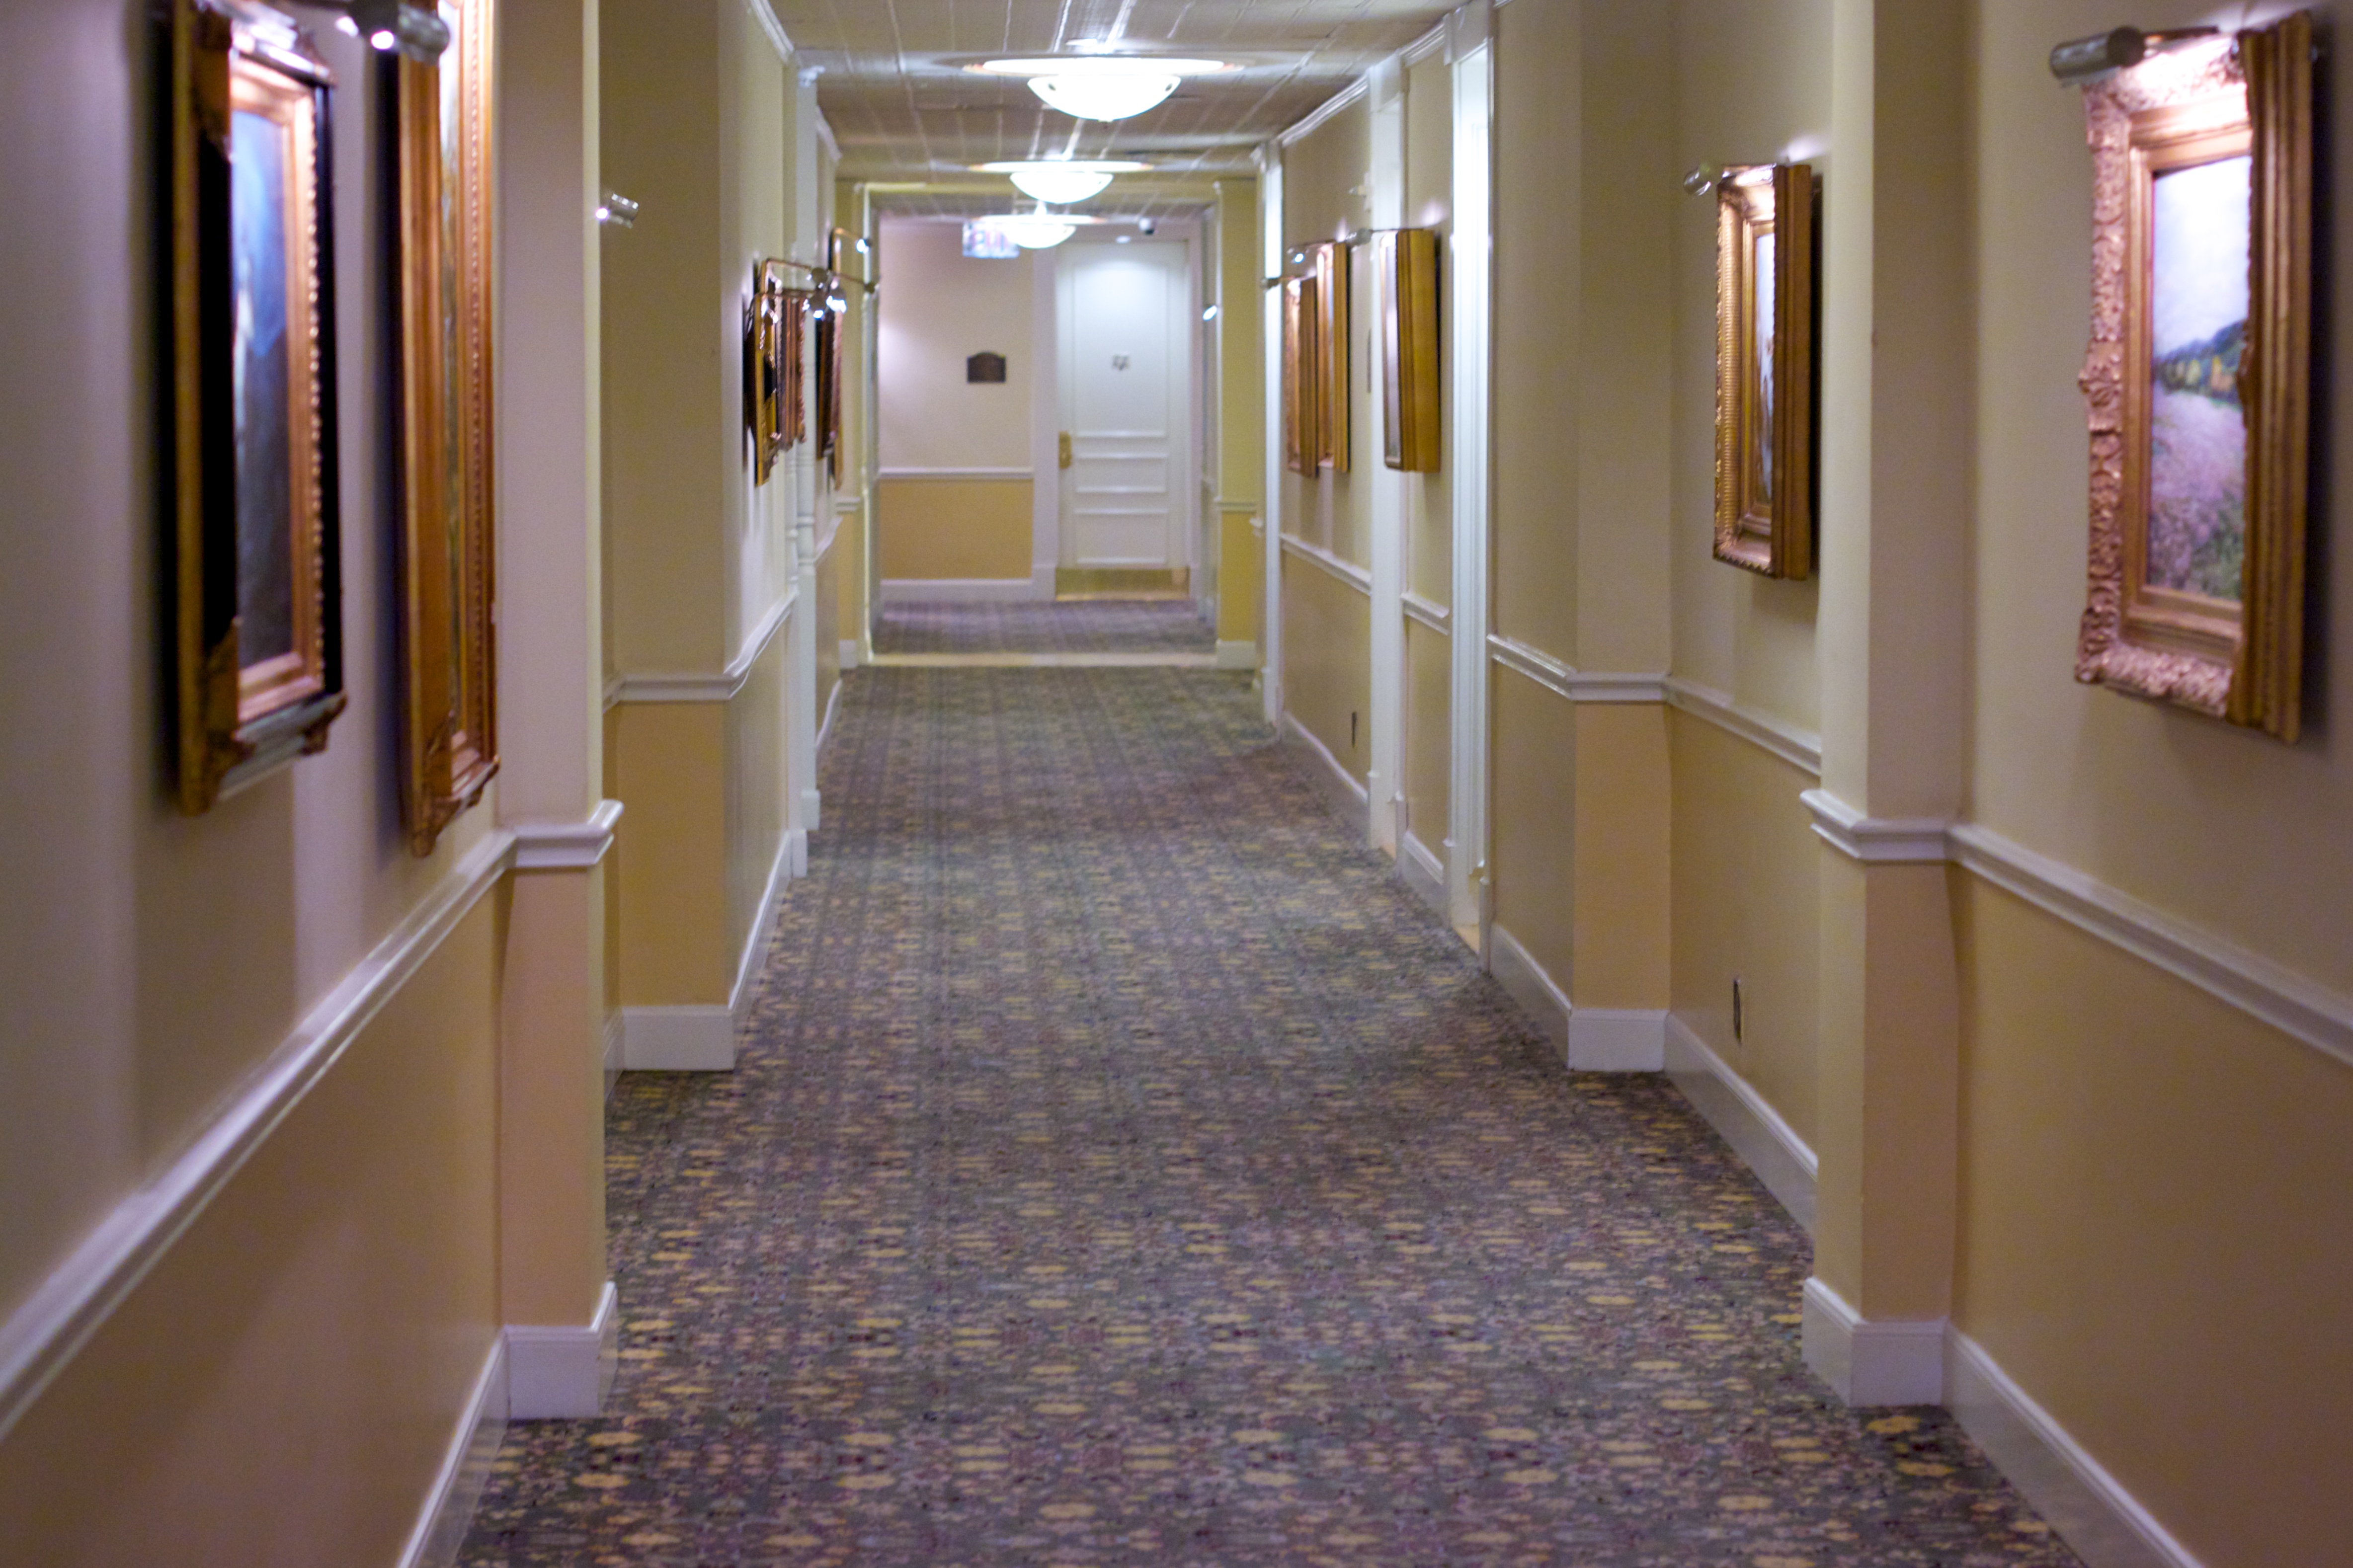 File:Driskill Hotel Hallway 2011 (5498344394).jpg - Wikimedia Commons